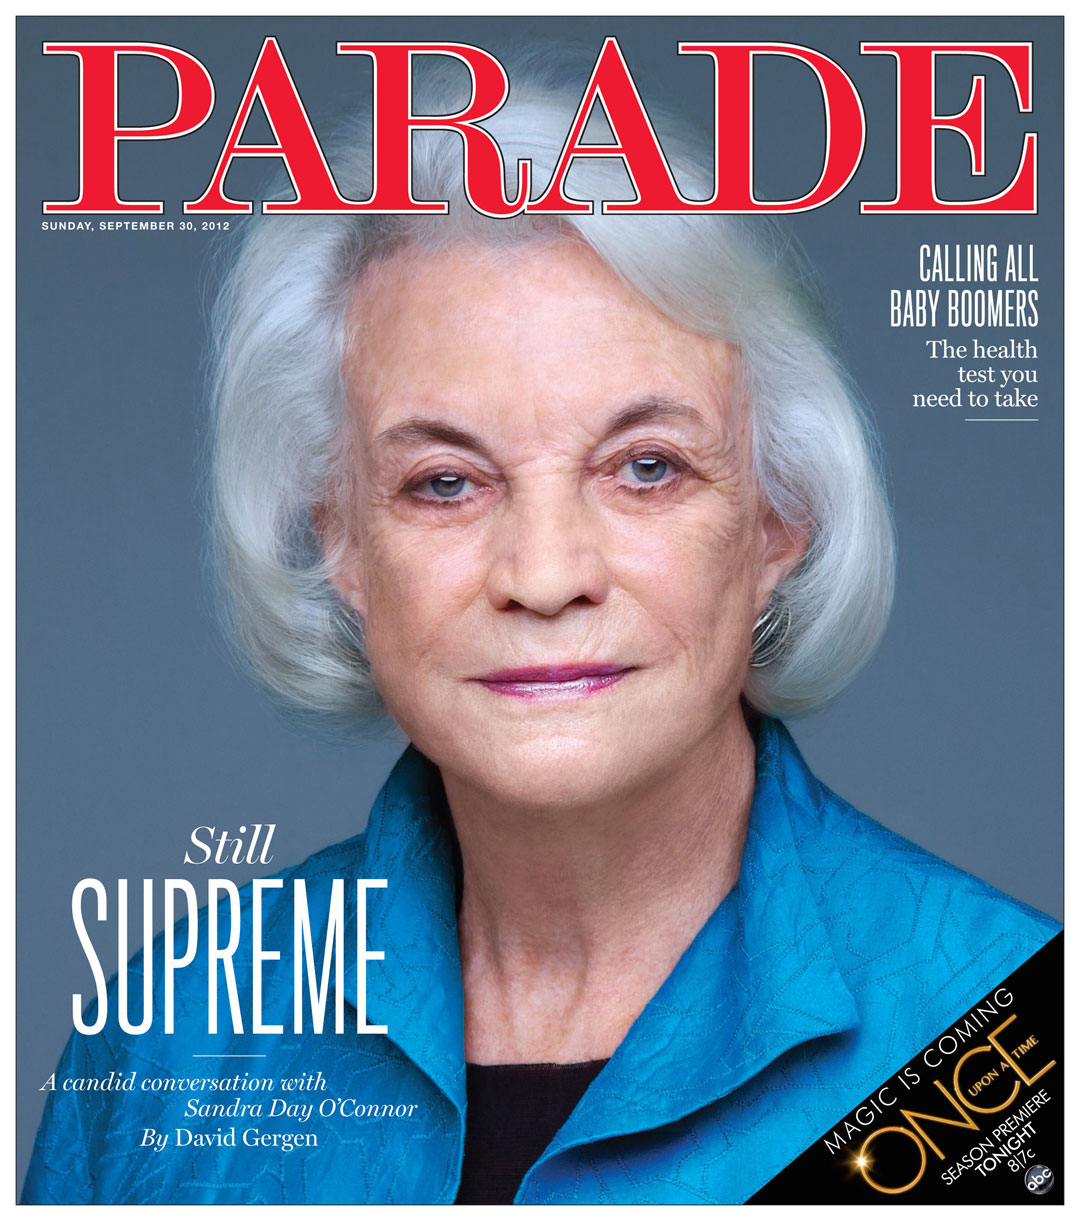 Celebrating Justice O’Connor: Parade Magazine Muffs the Job